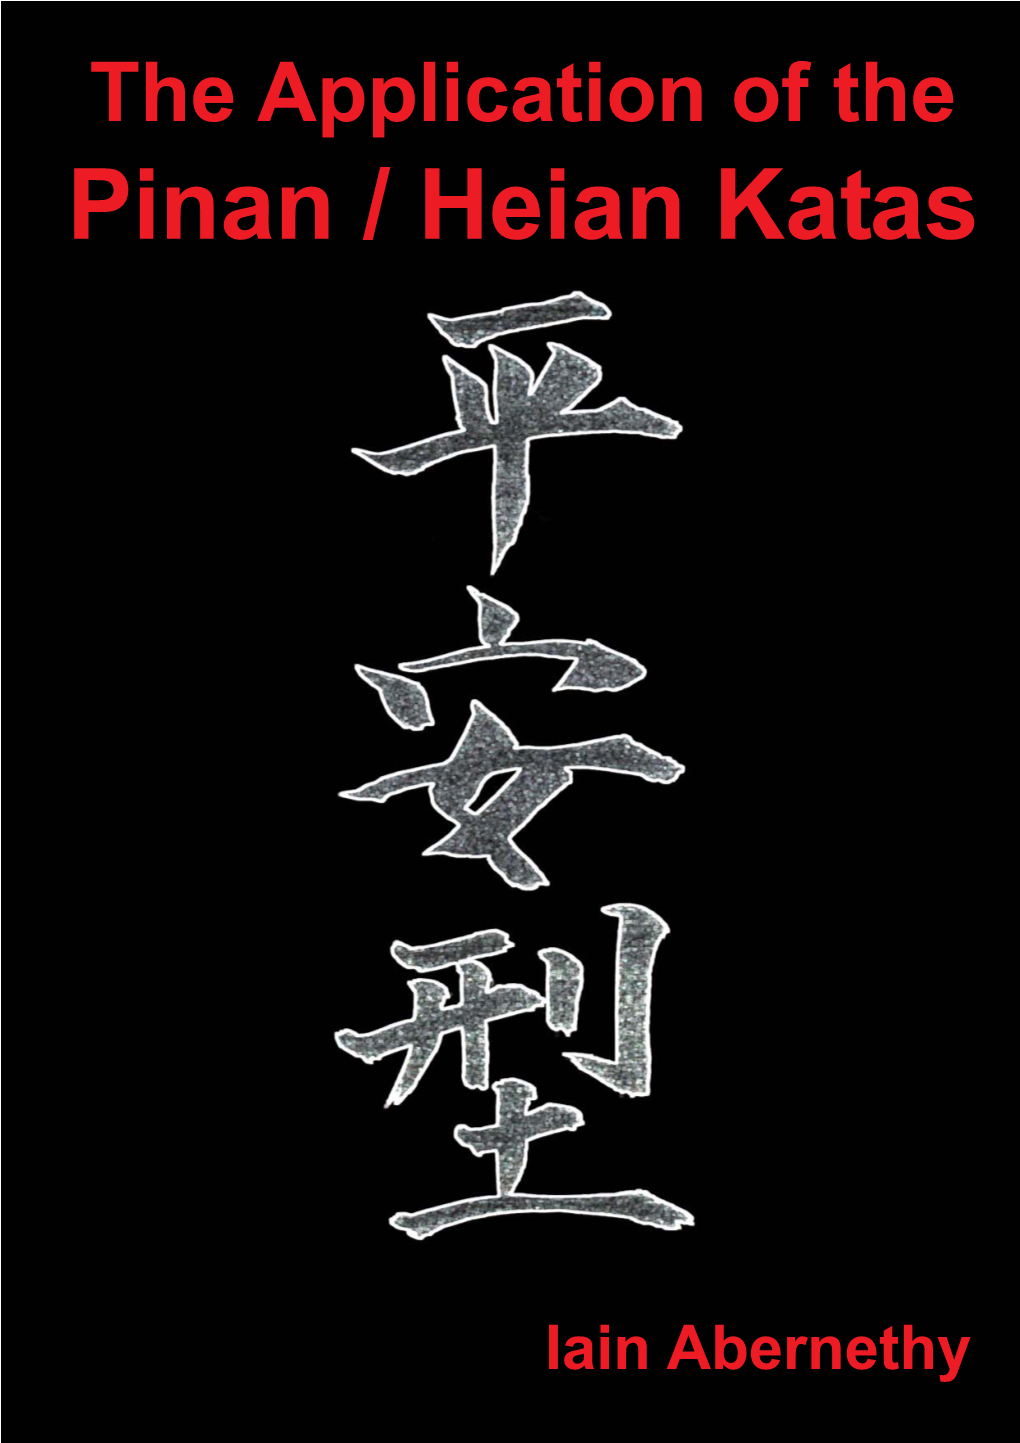 The Application of the Pinan / Heian Katas